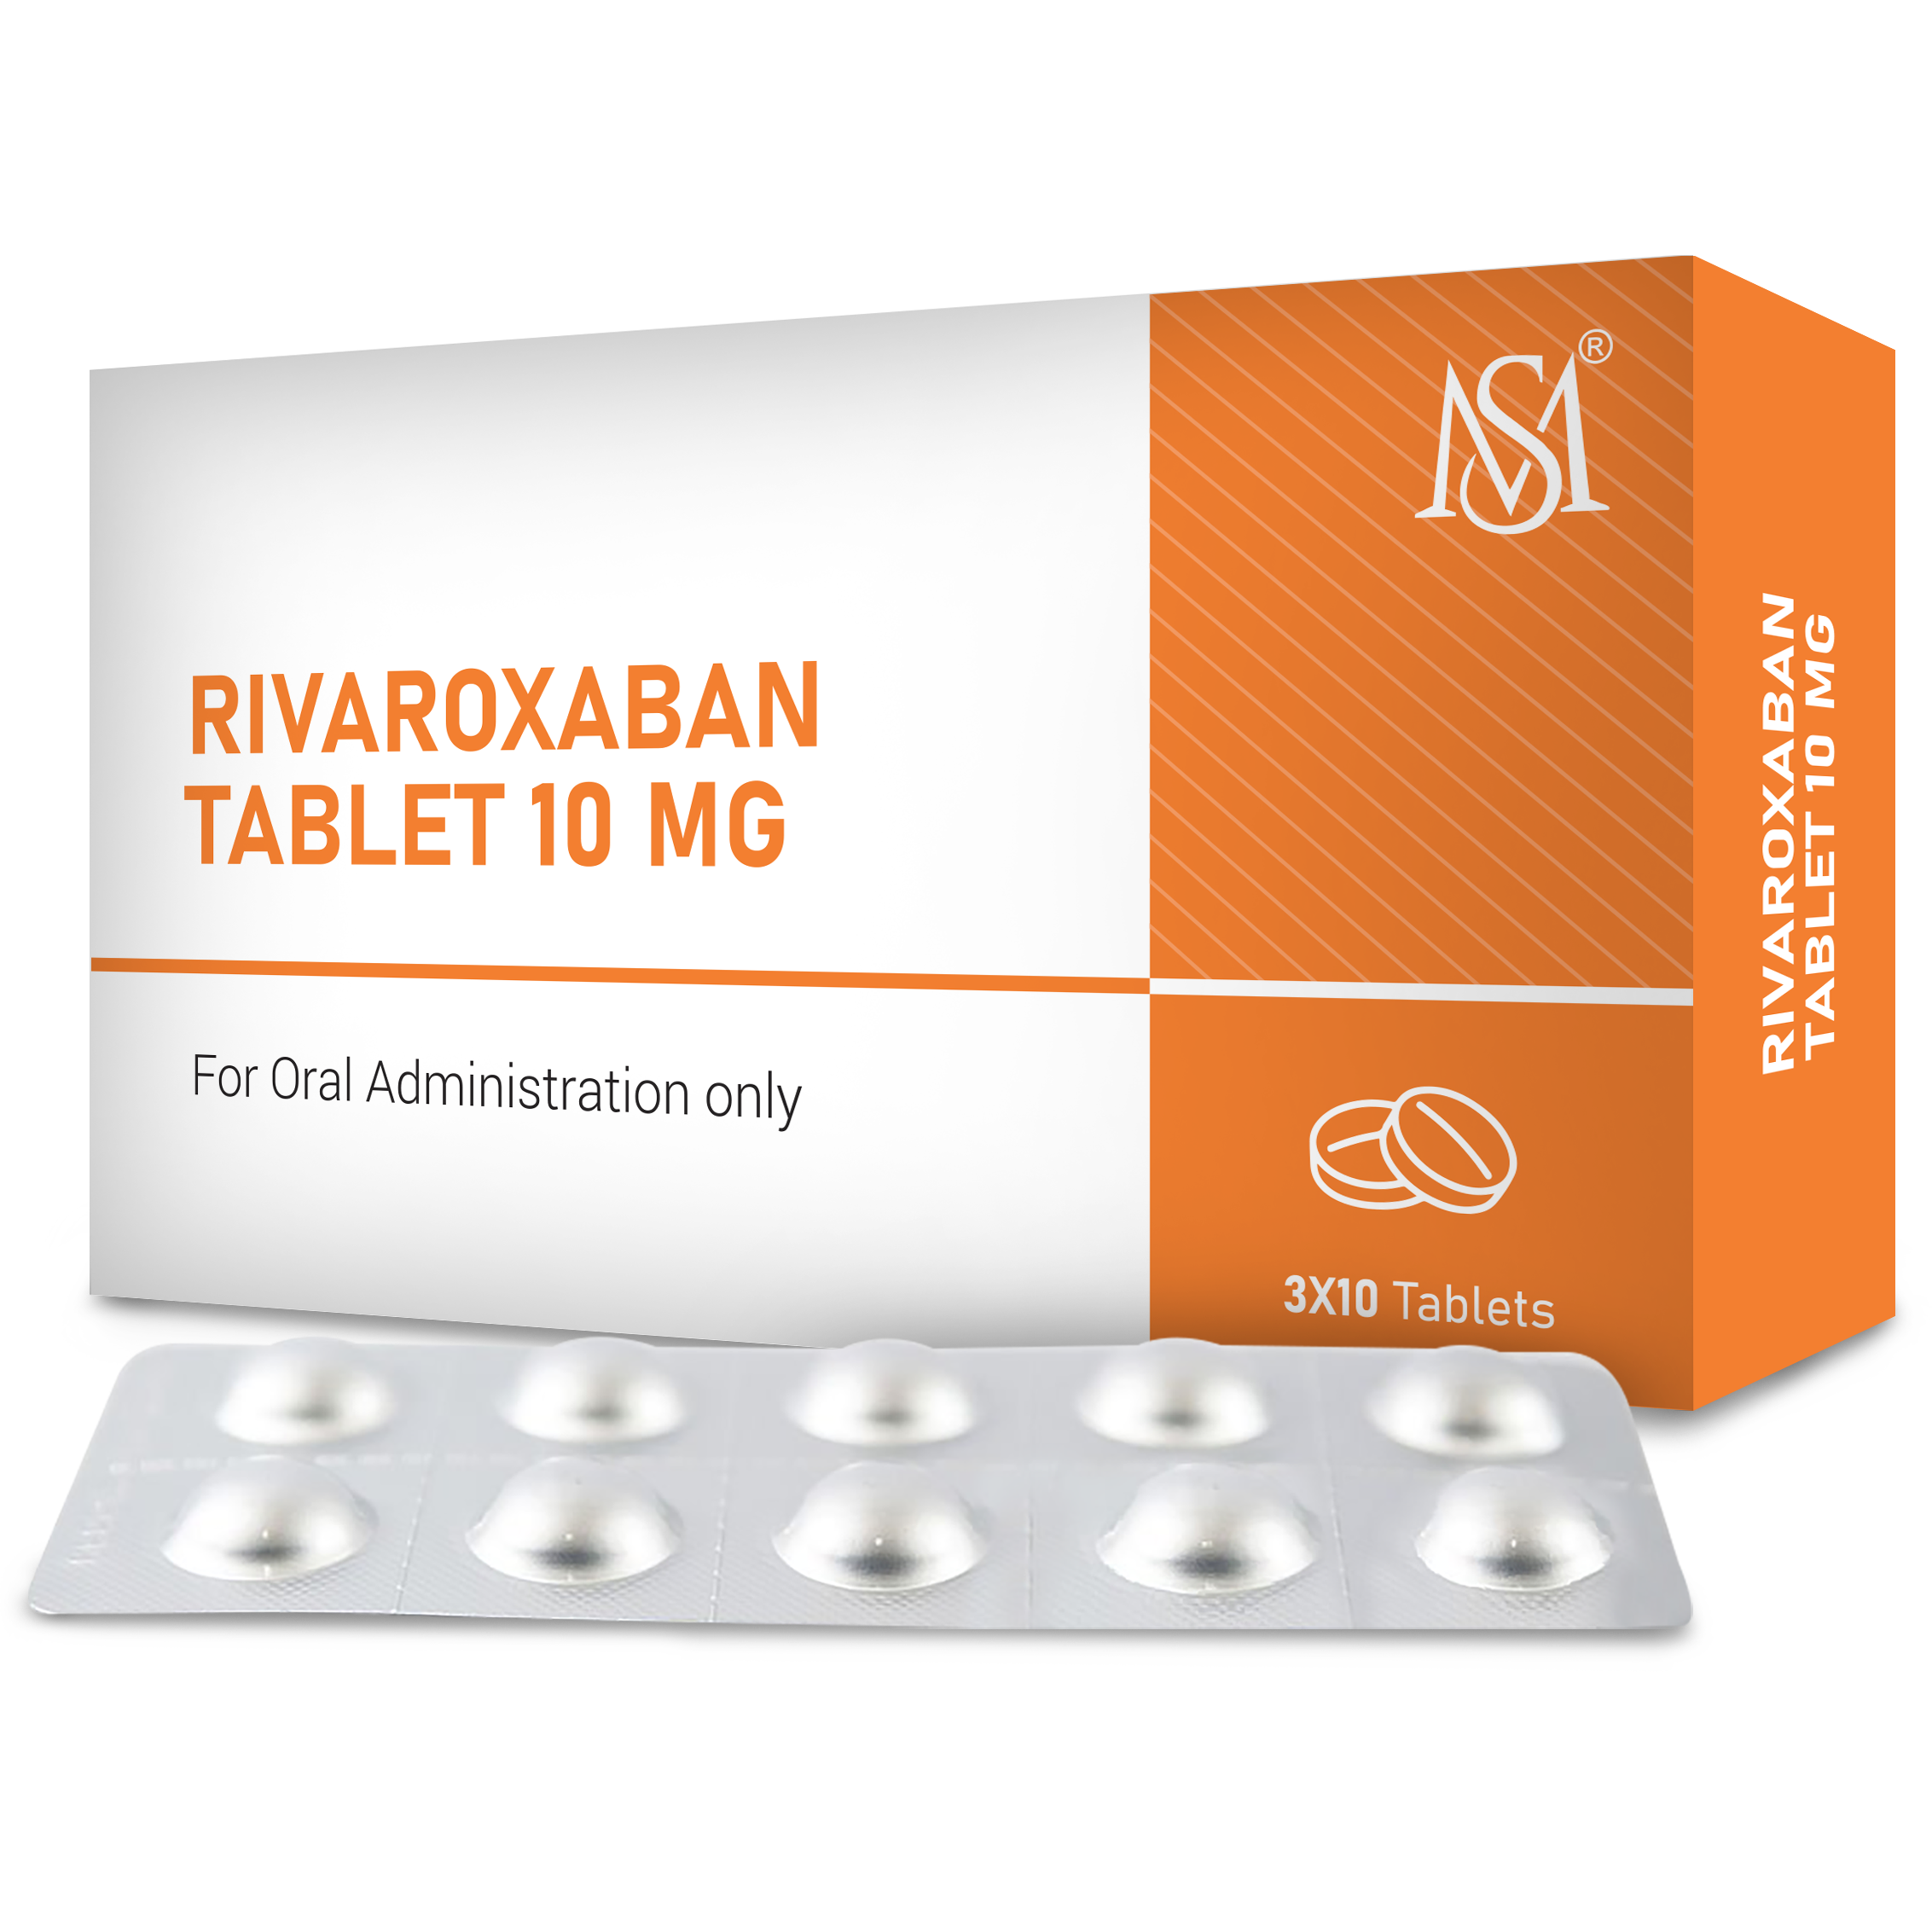 Rivaroxaban Tablet 10 mg